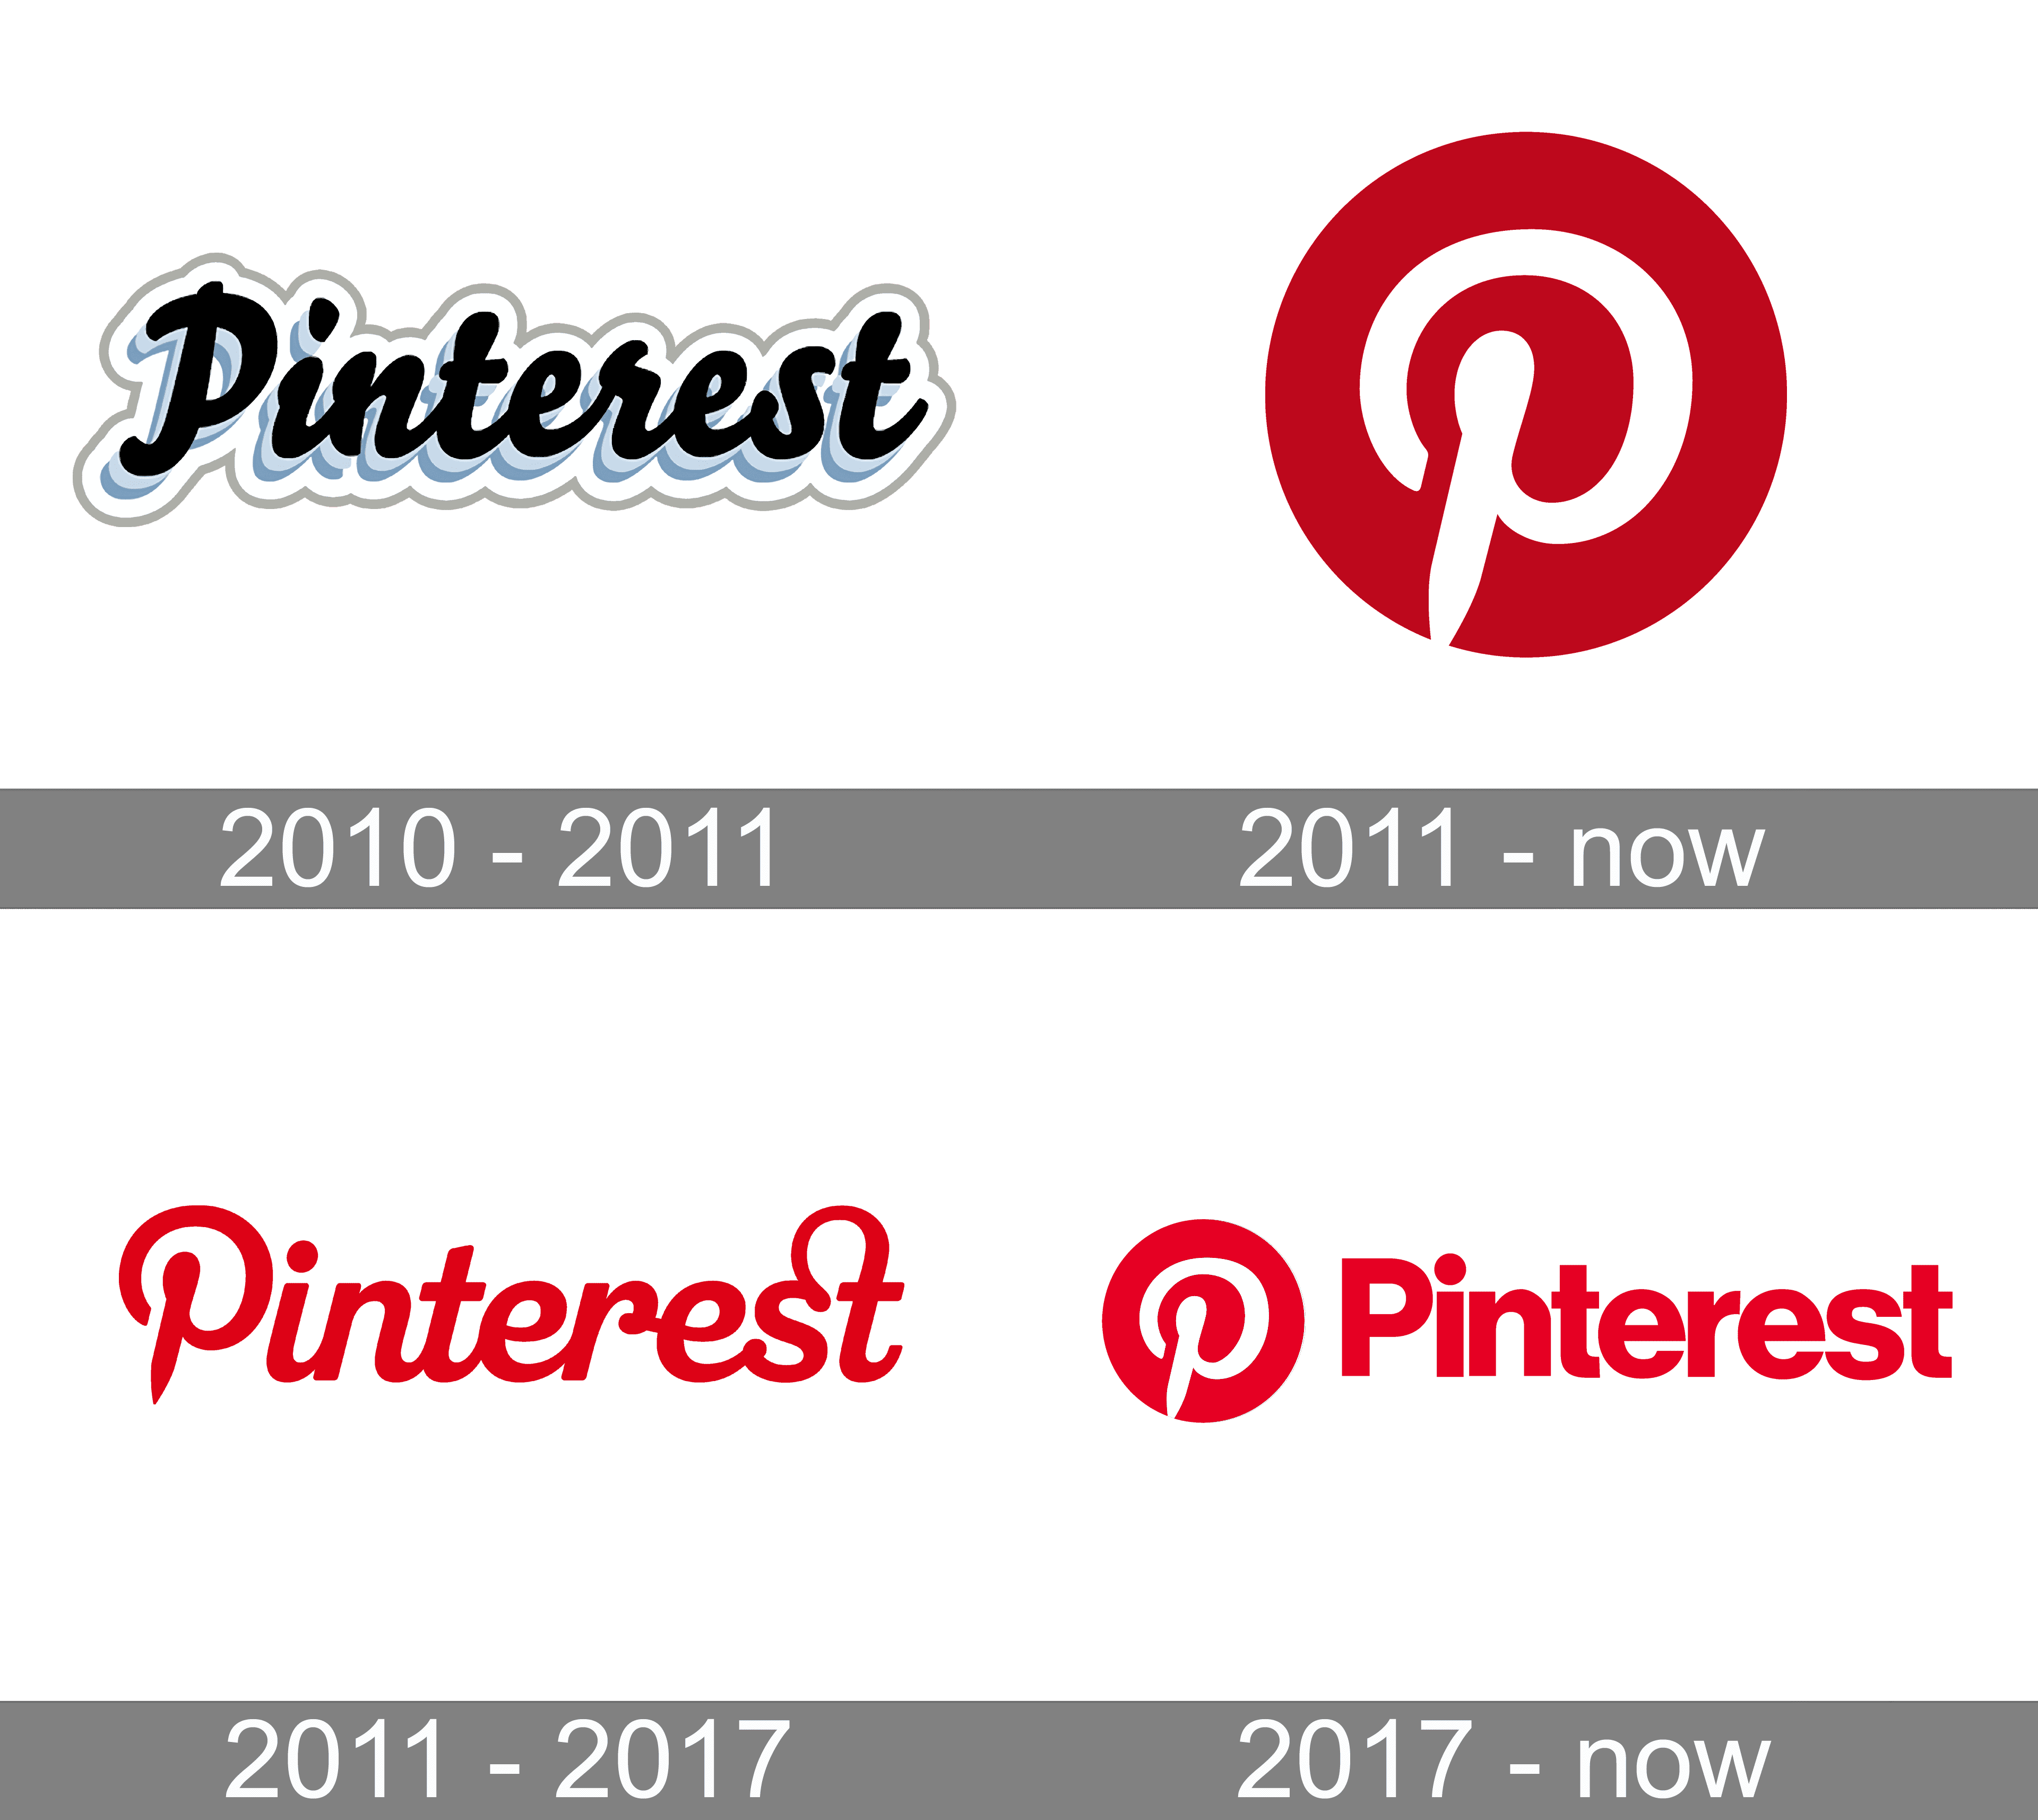 Pinterest em 2023